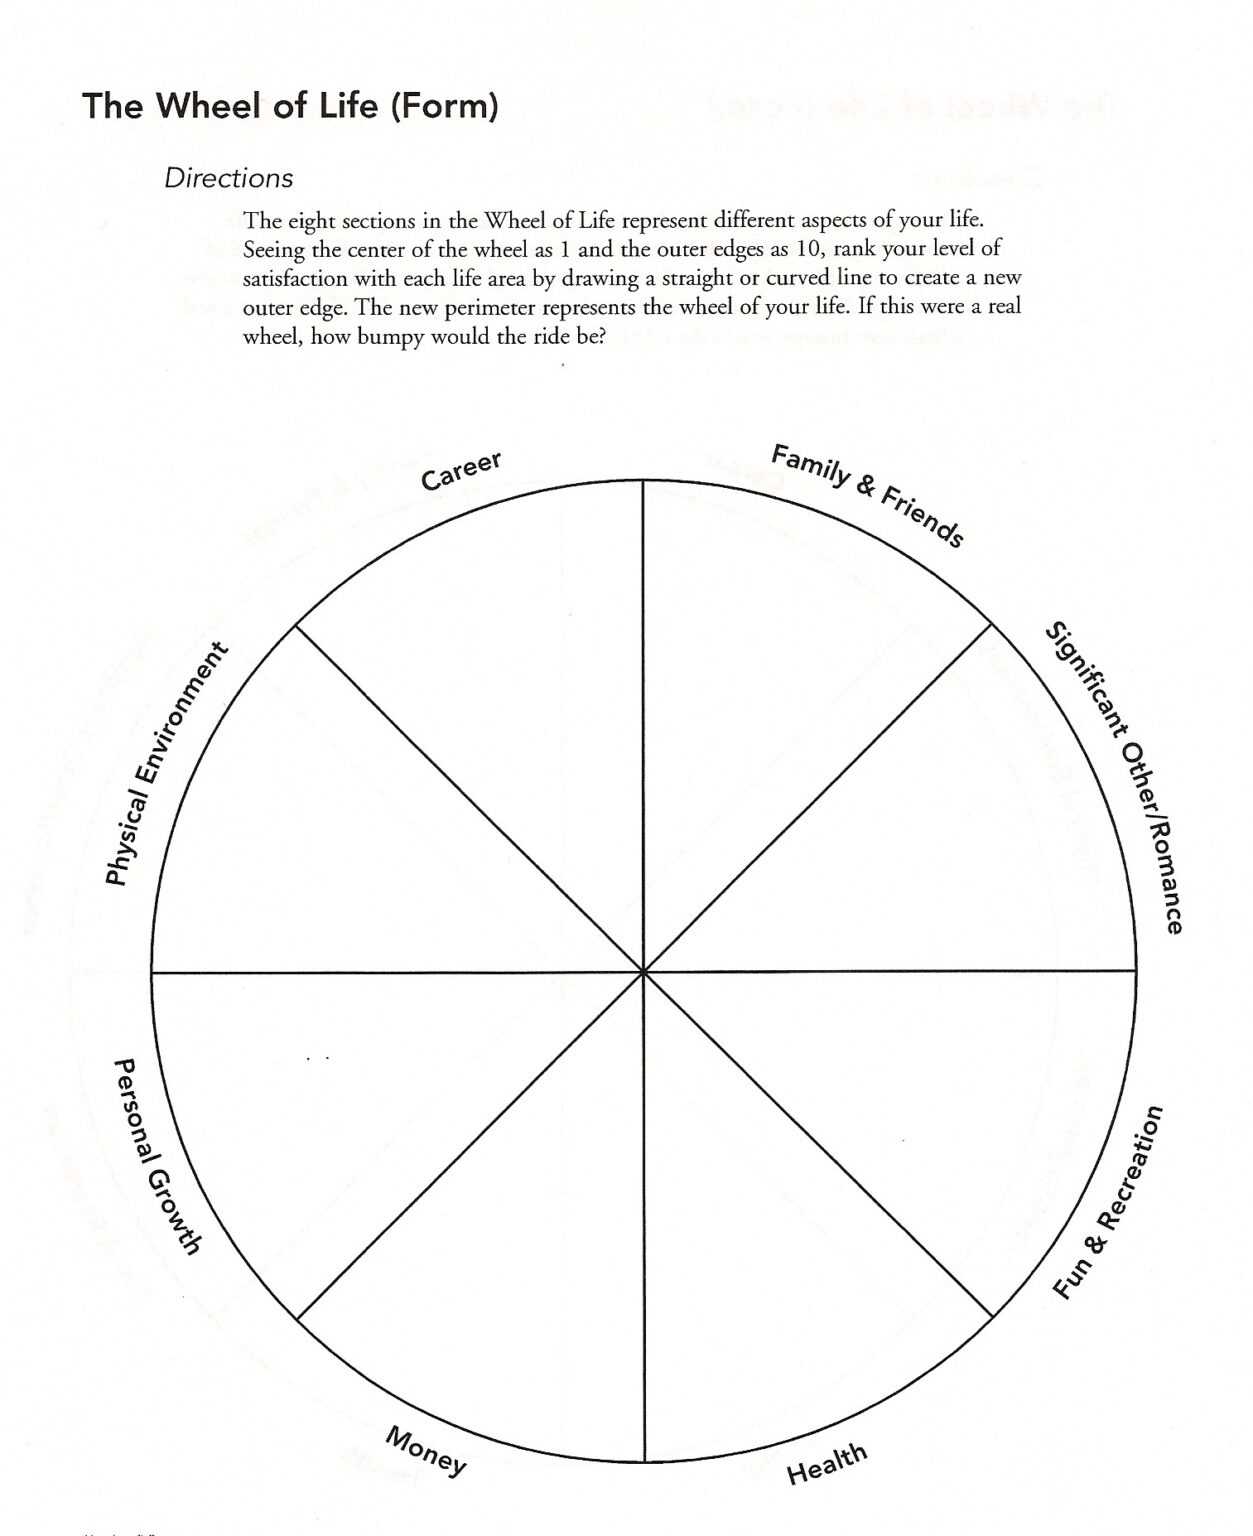 wheel of life coaching